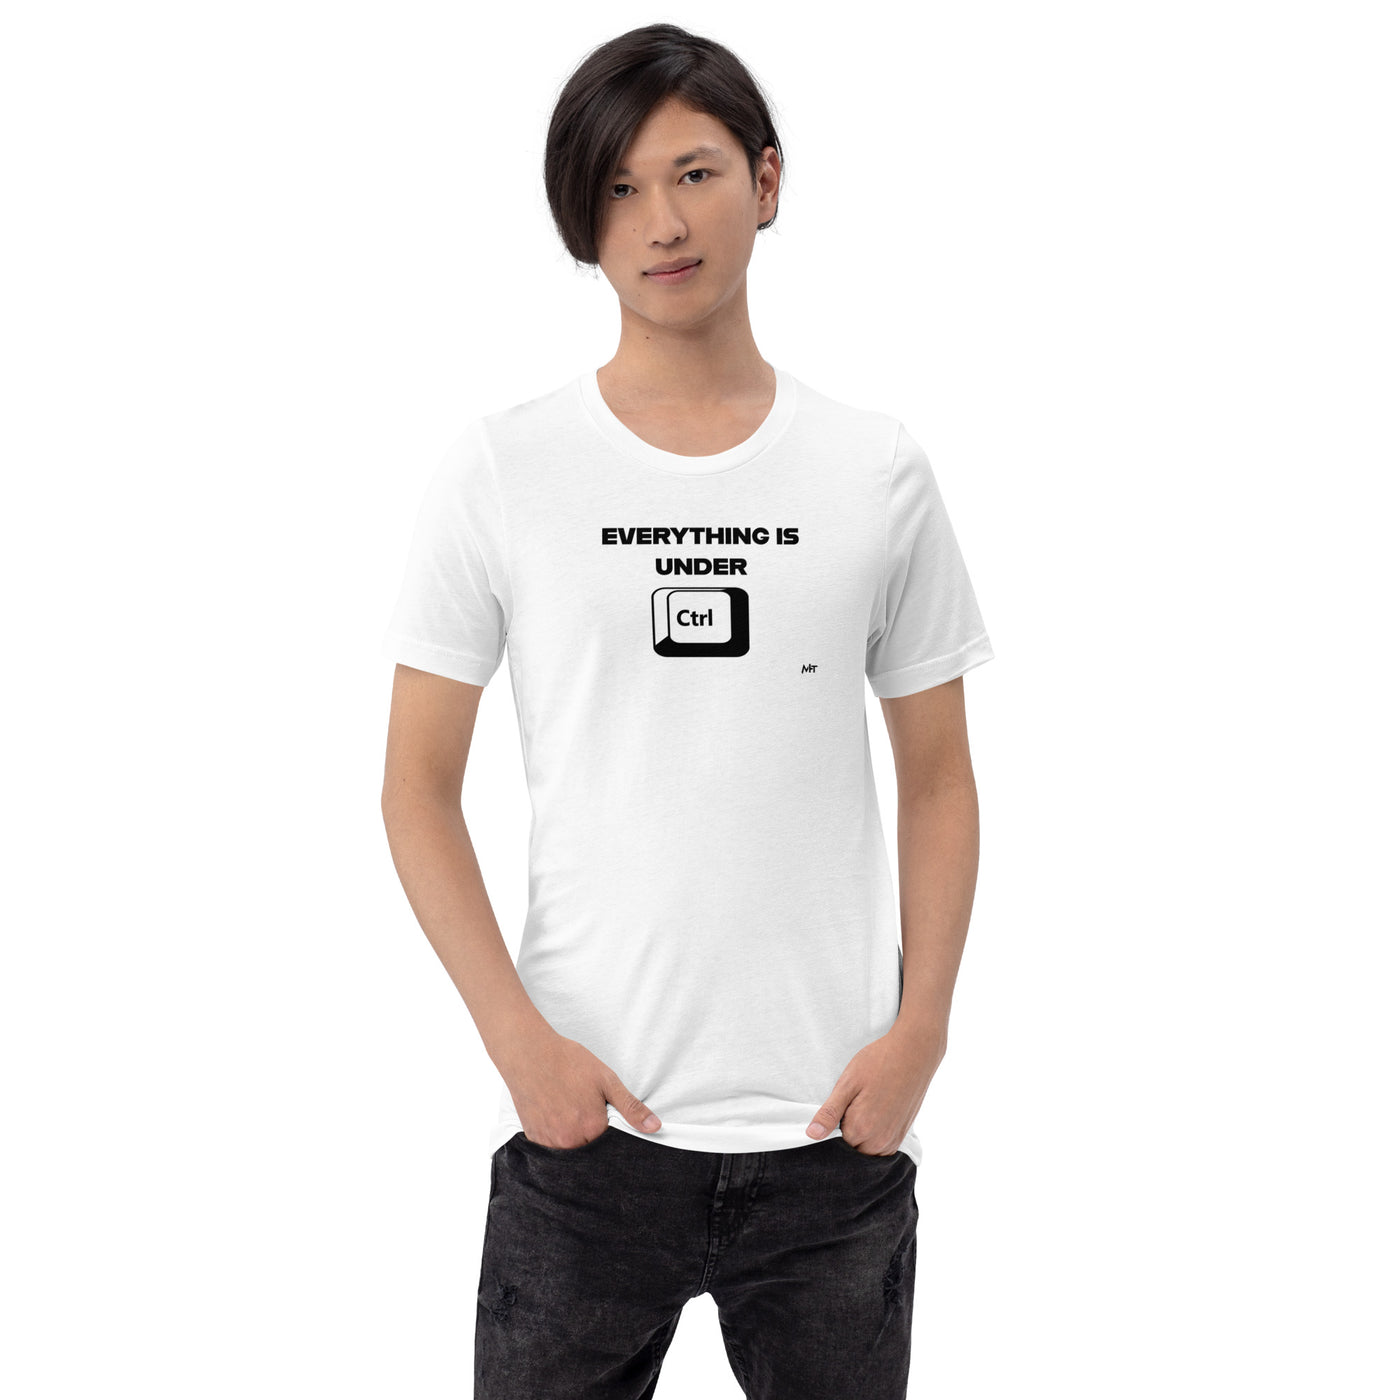 Everything is under Ctrl - Unisex t-shirt